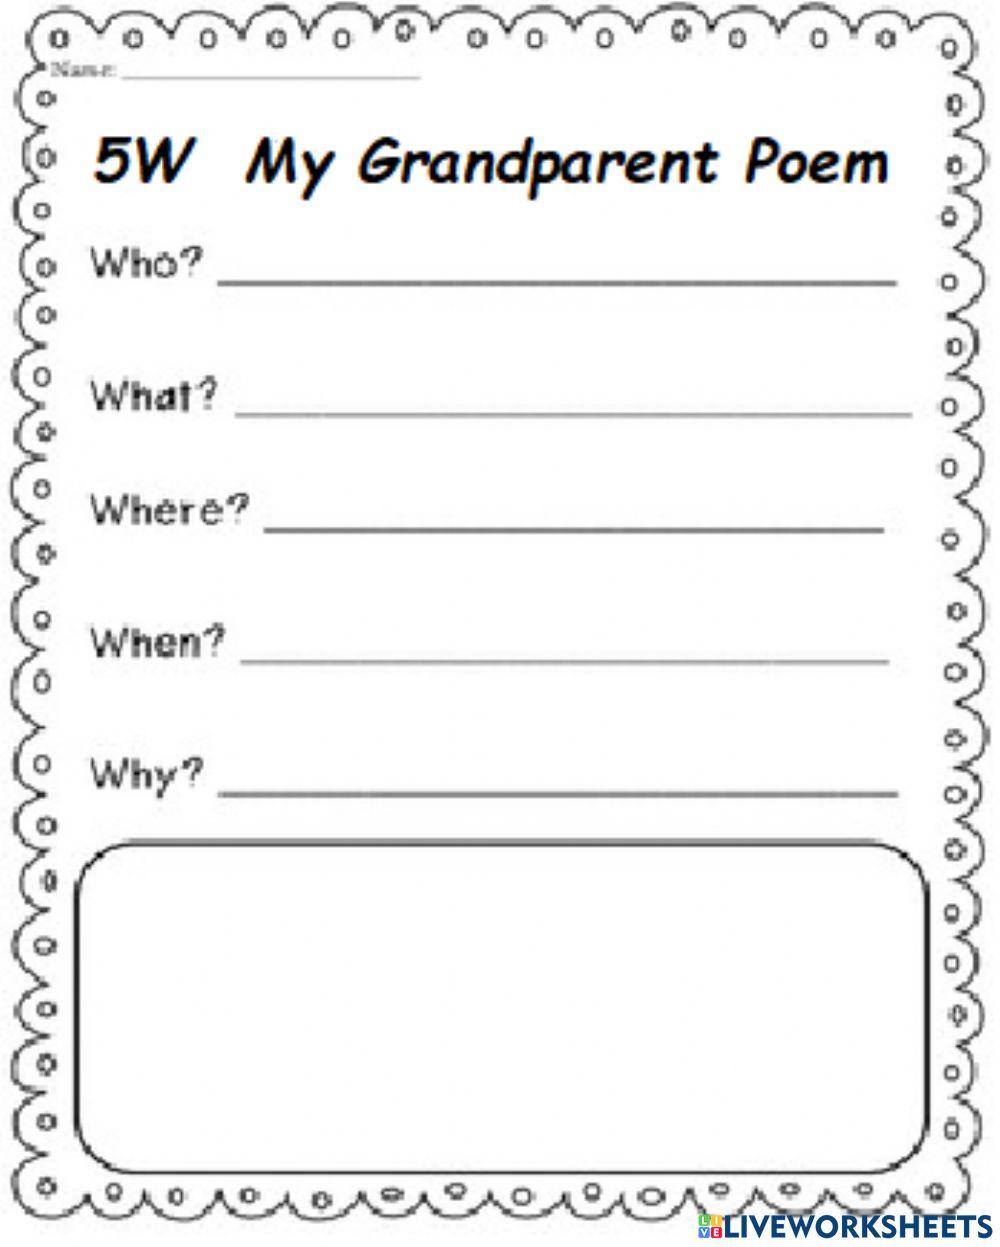 5W Poem My Grandparent